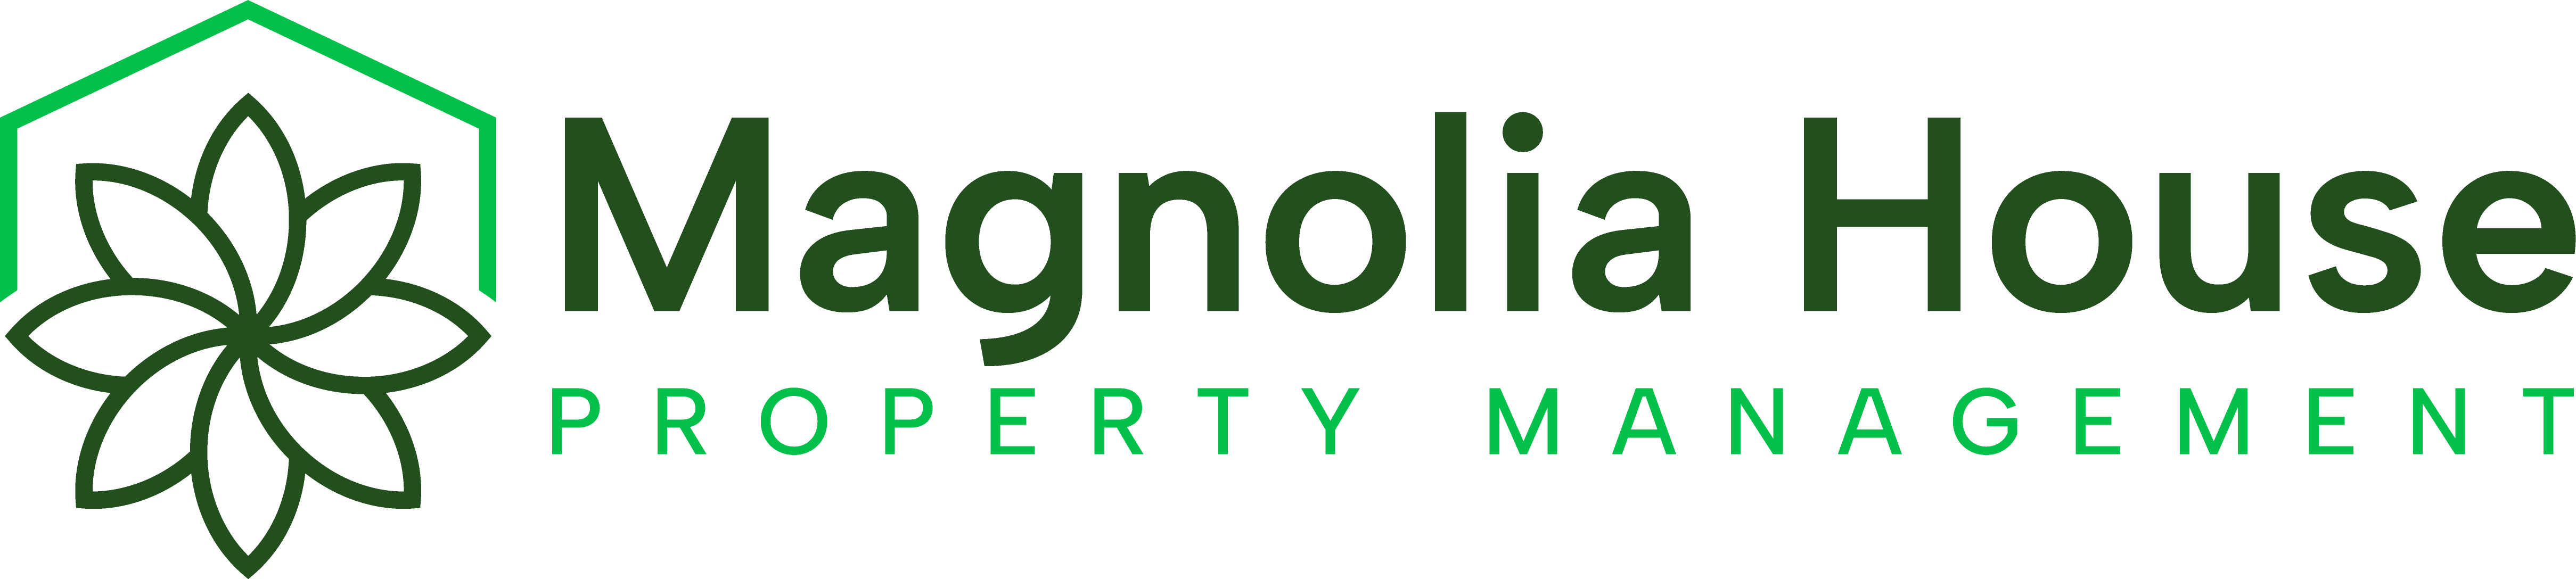 Magnolia House Property Management